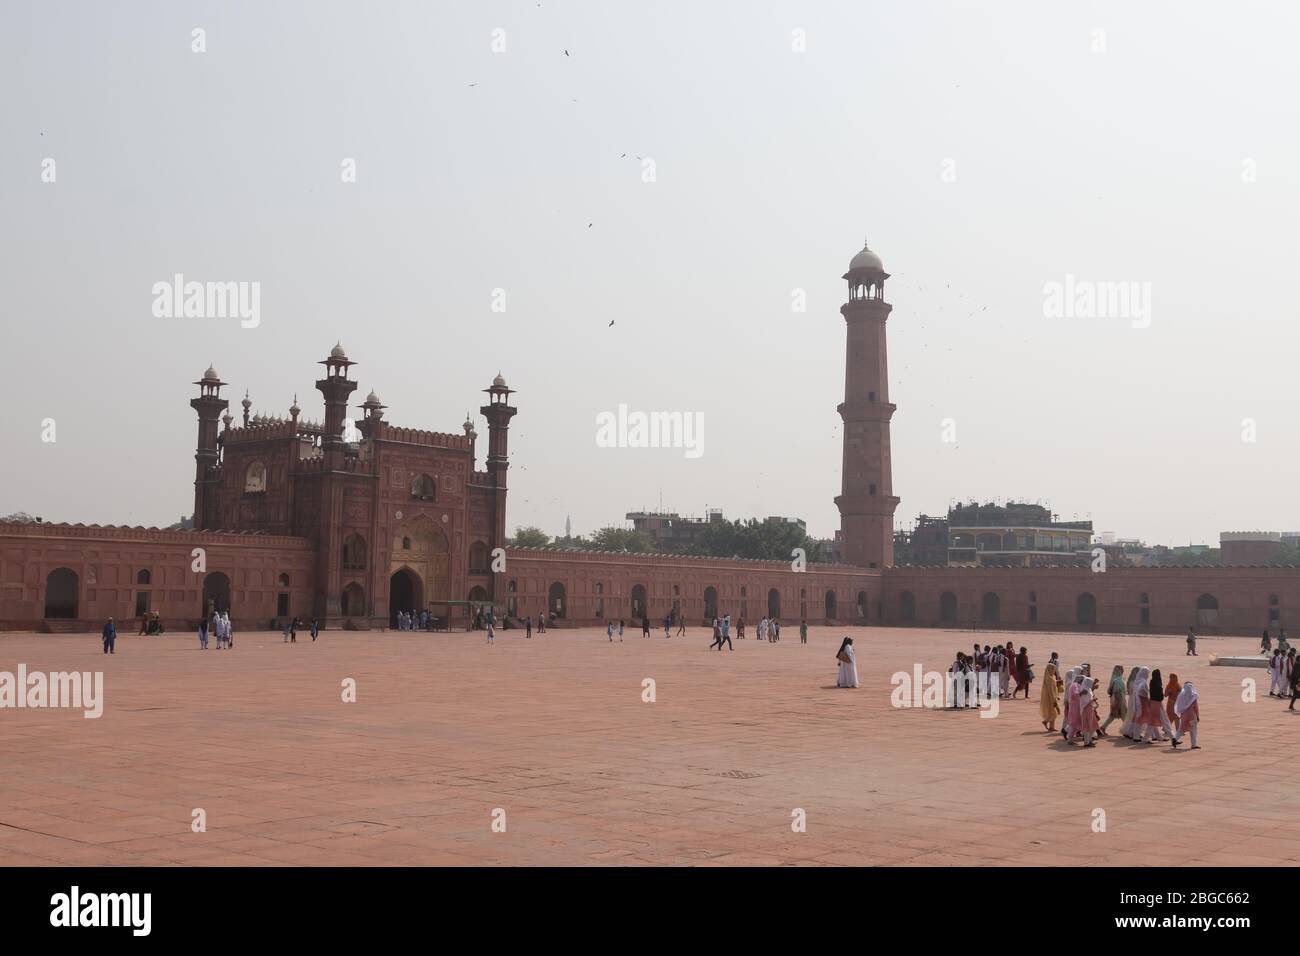 Badshahi mosque in Lahore, Pakistan Stock Photo